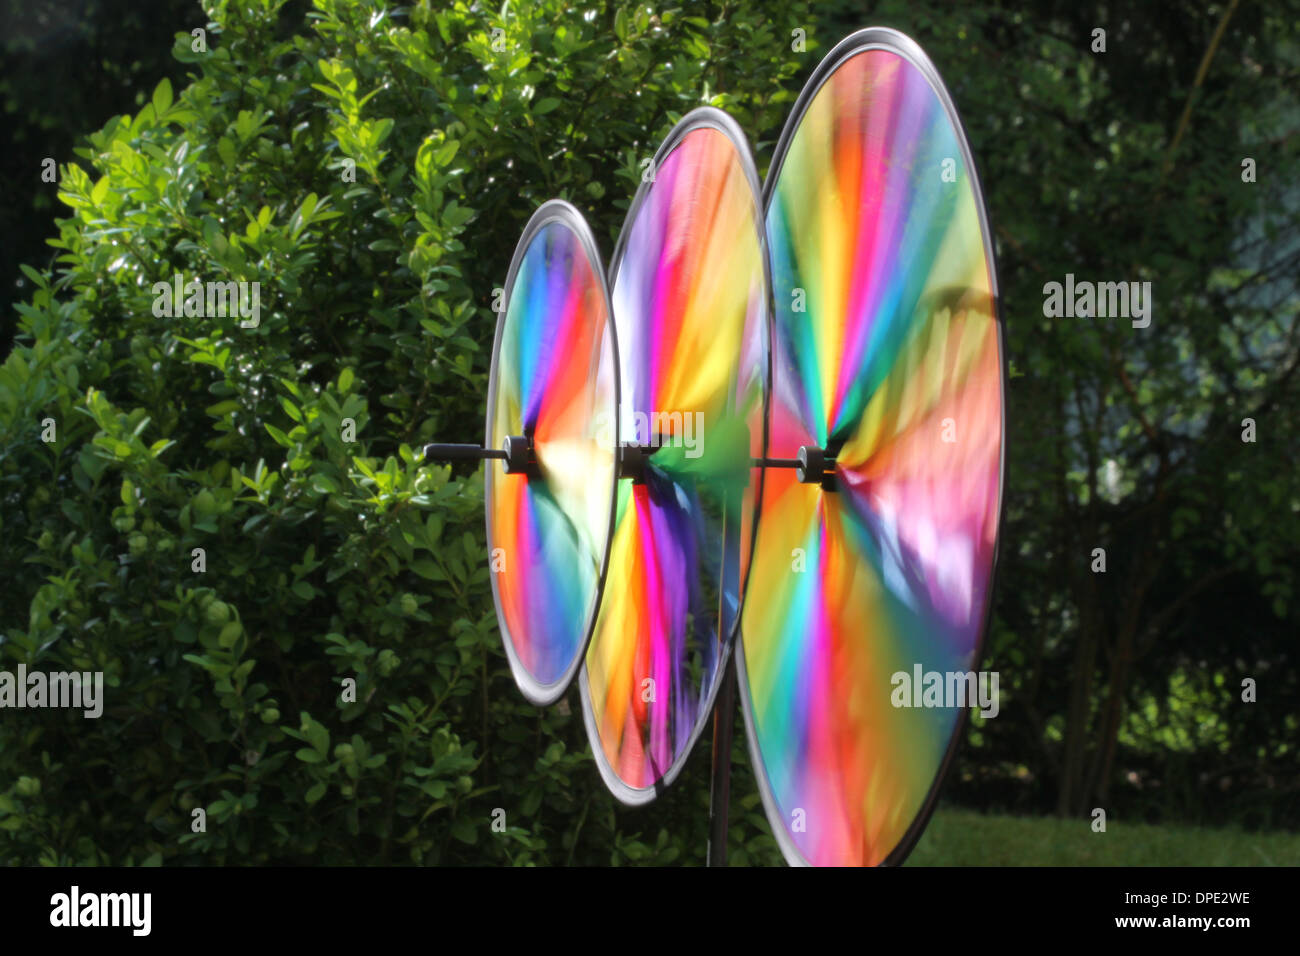 Colorful wind wheel in garden Stock Photo